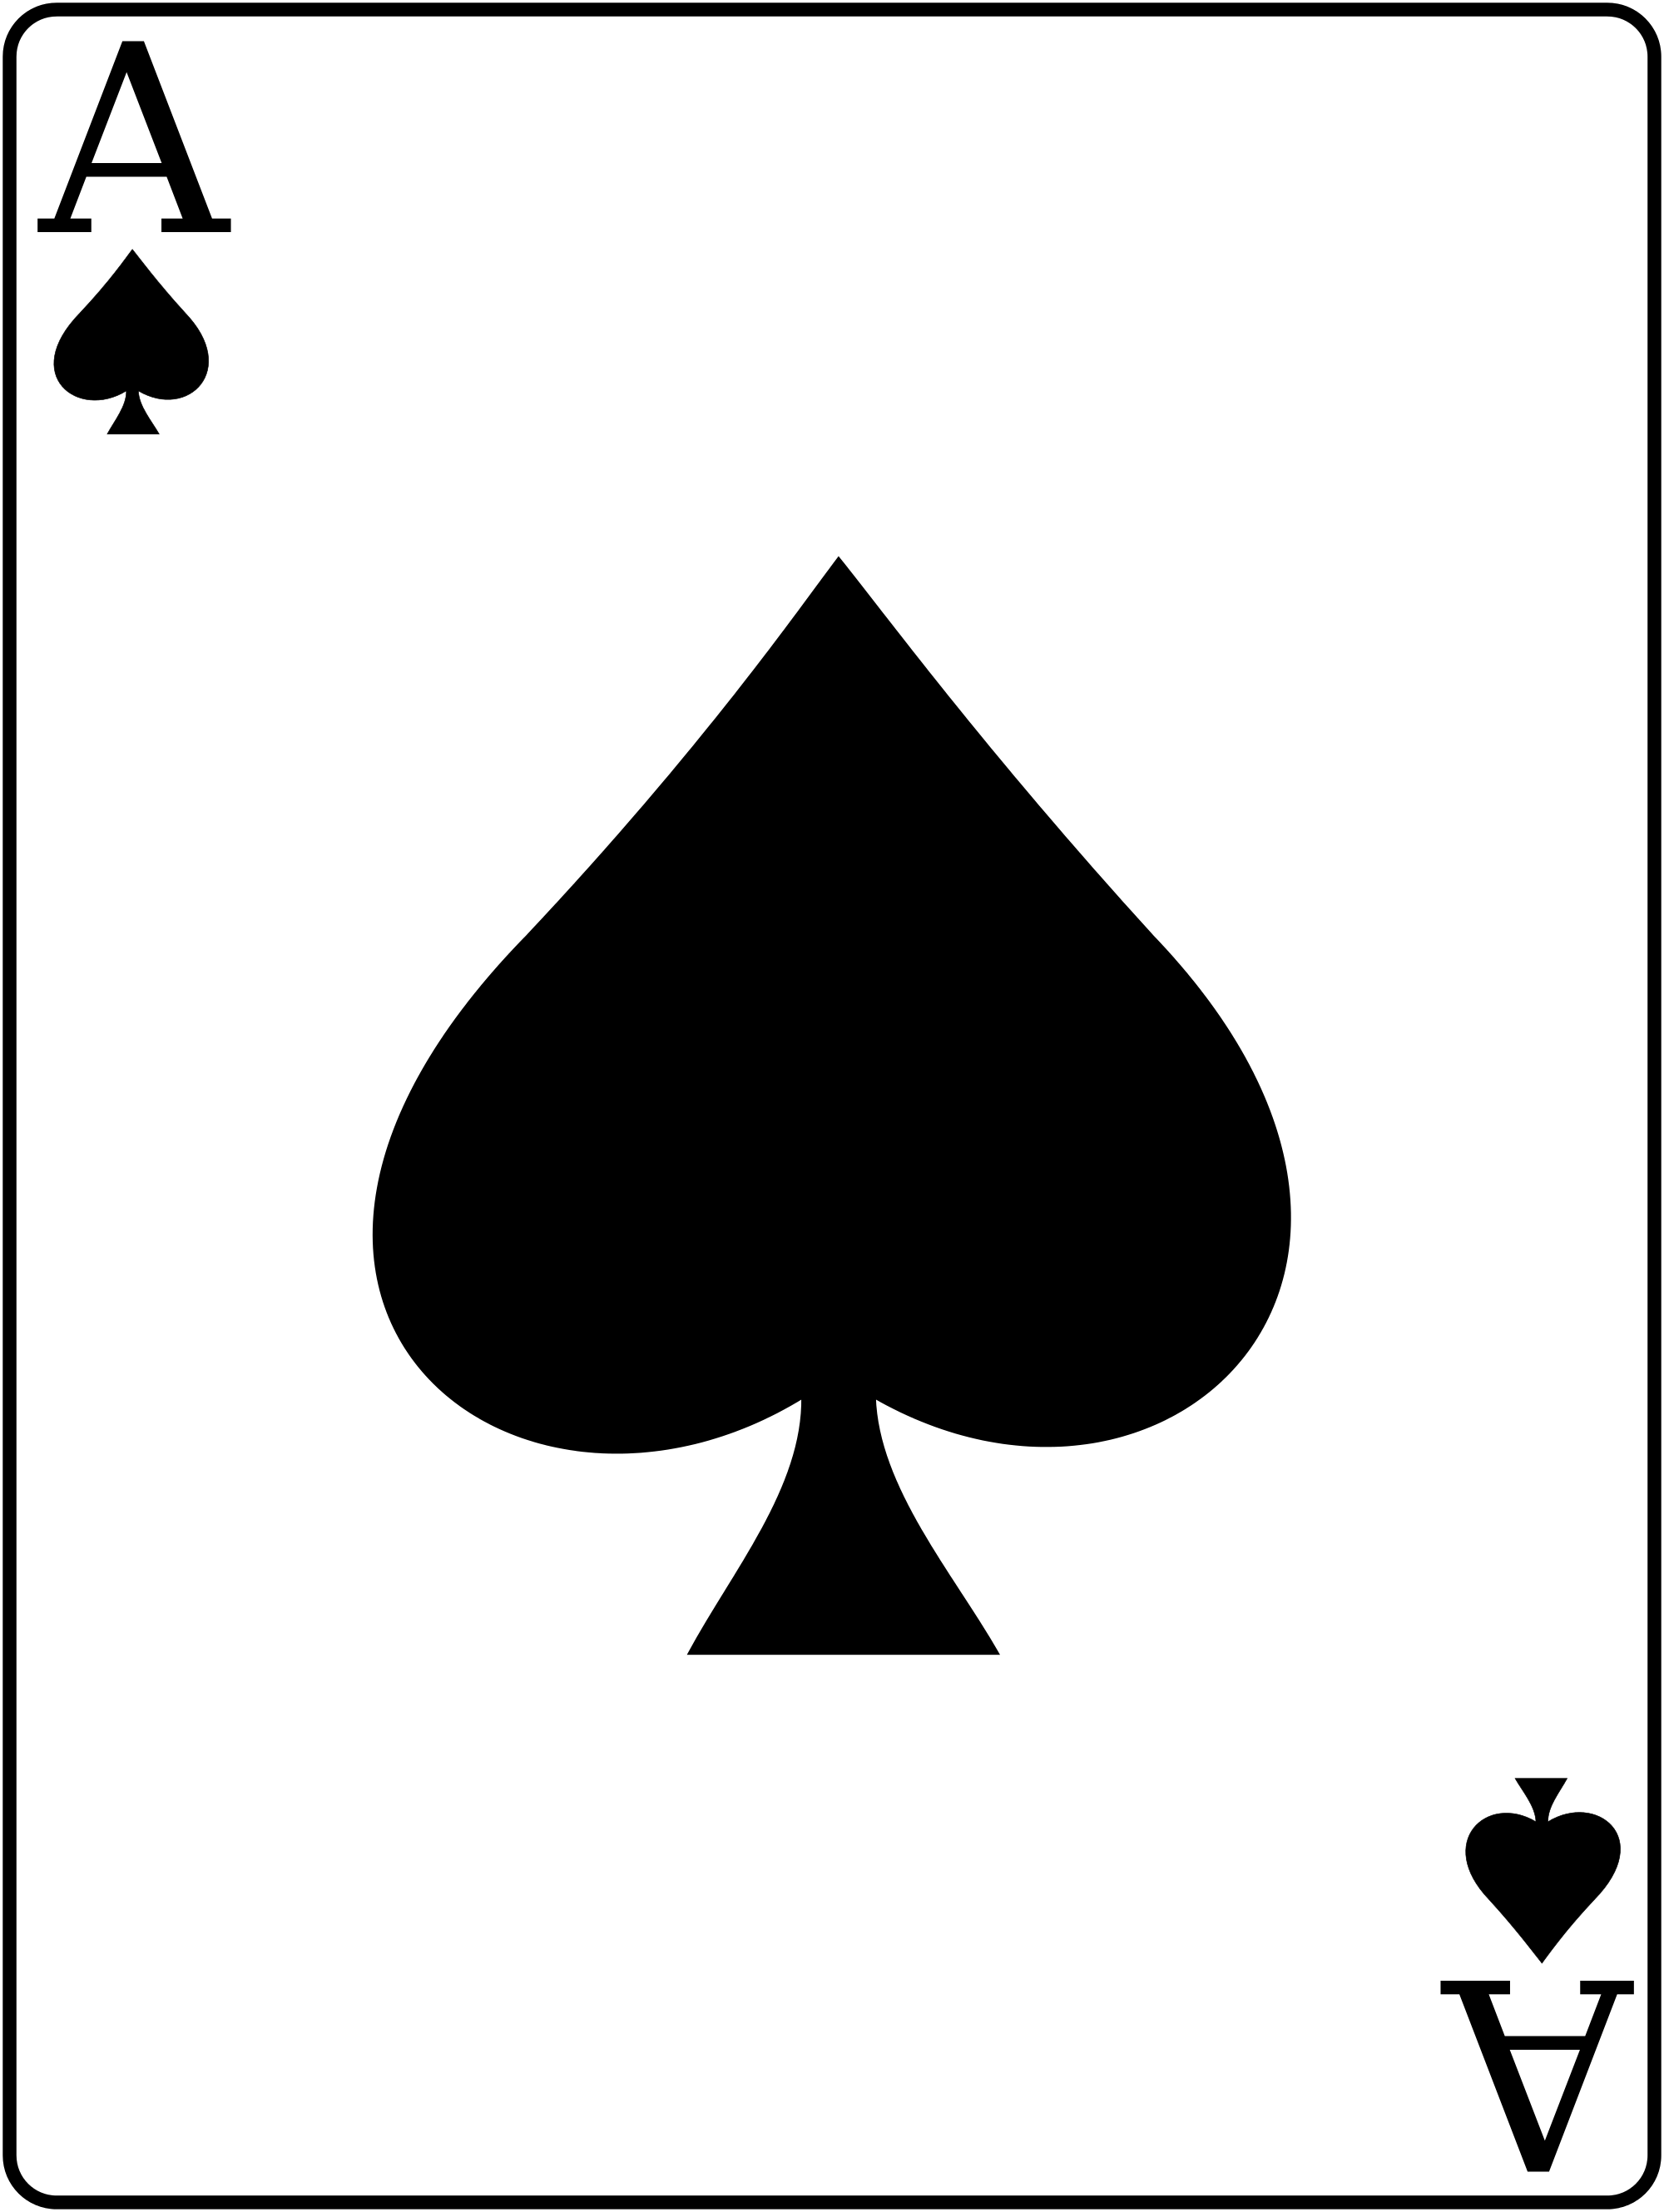 ace of spades symbol